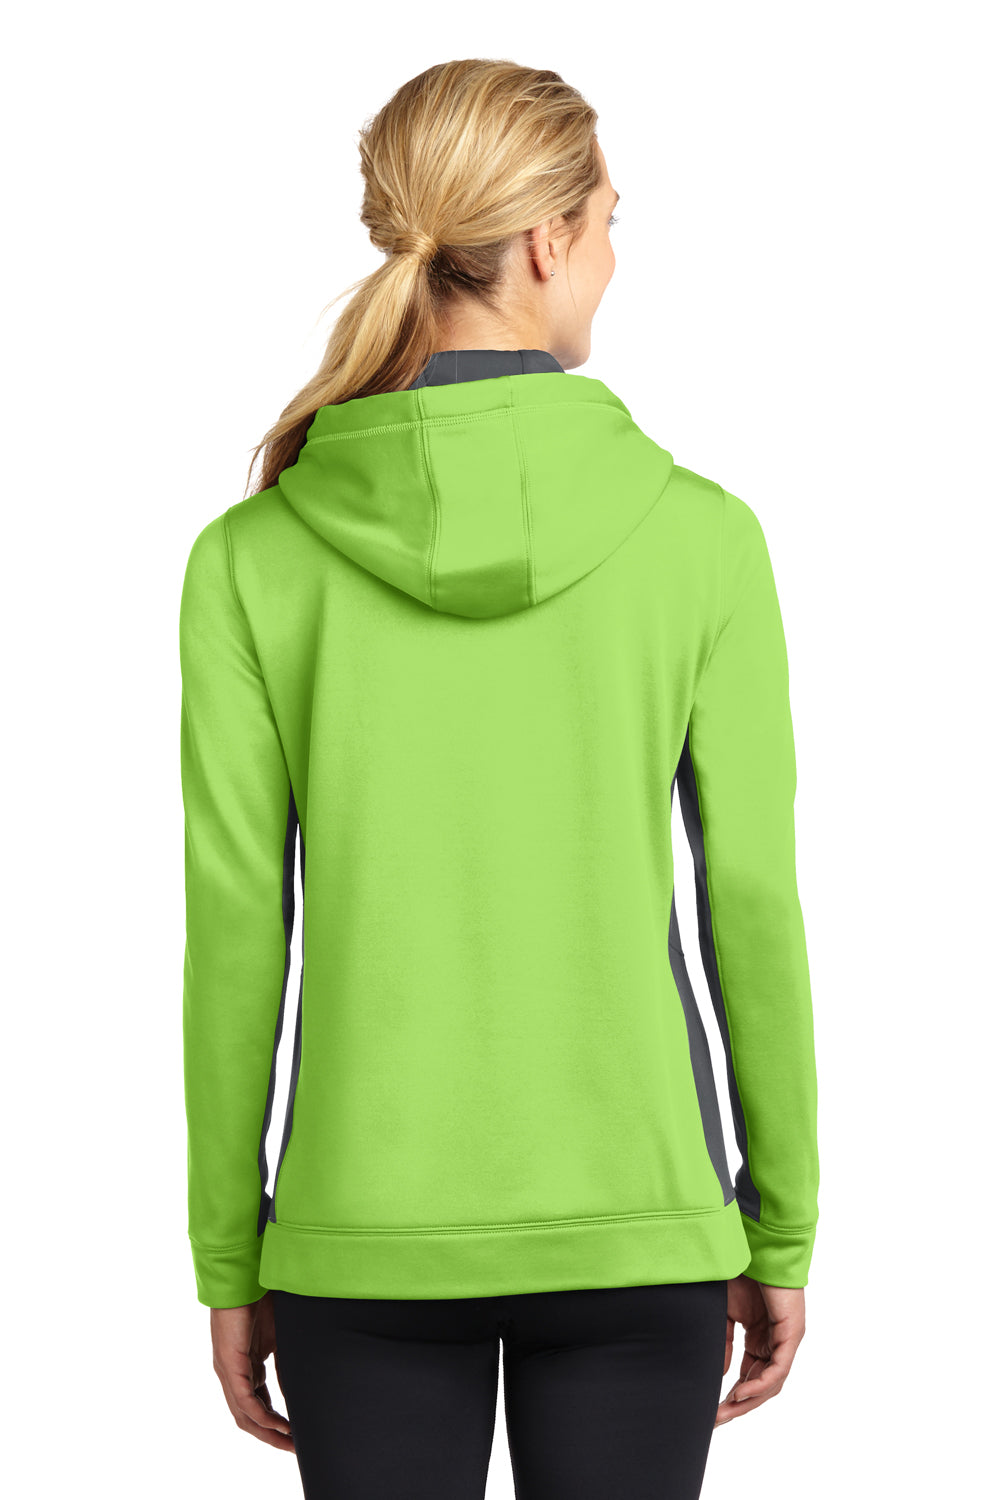 Womens Lime Green Sweatshirt Sale